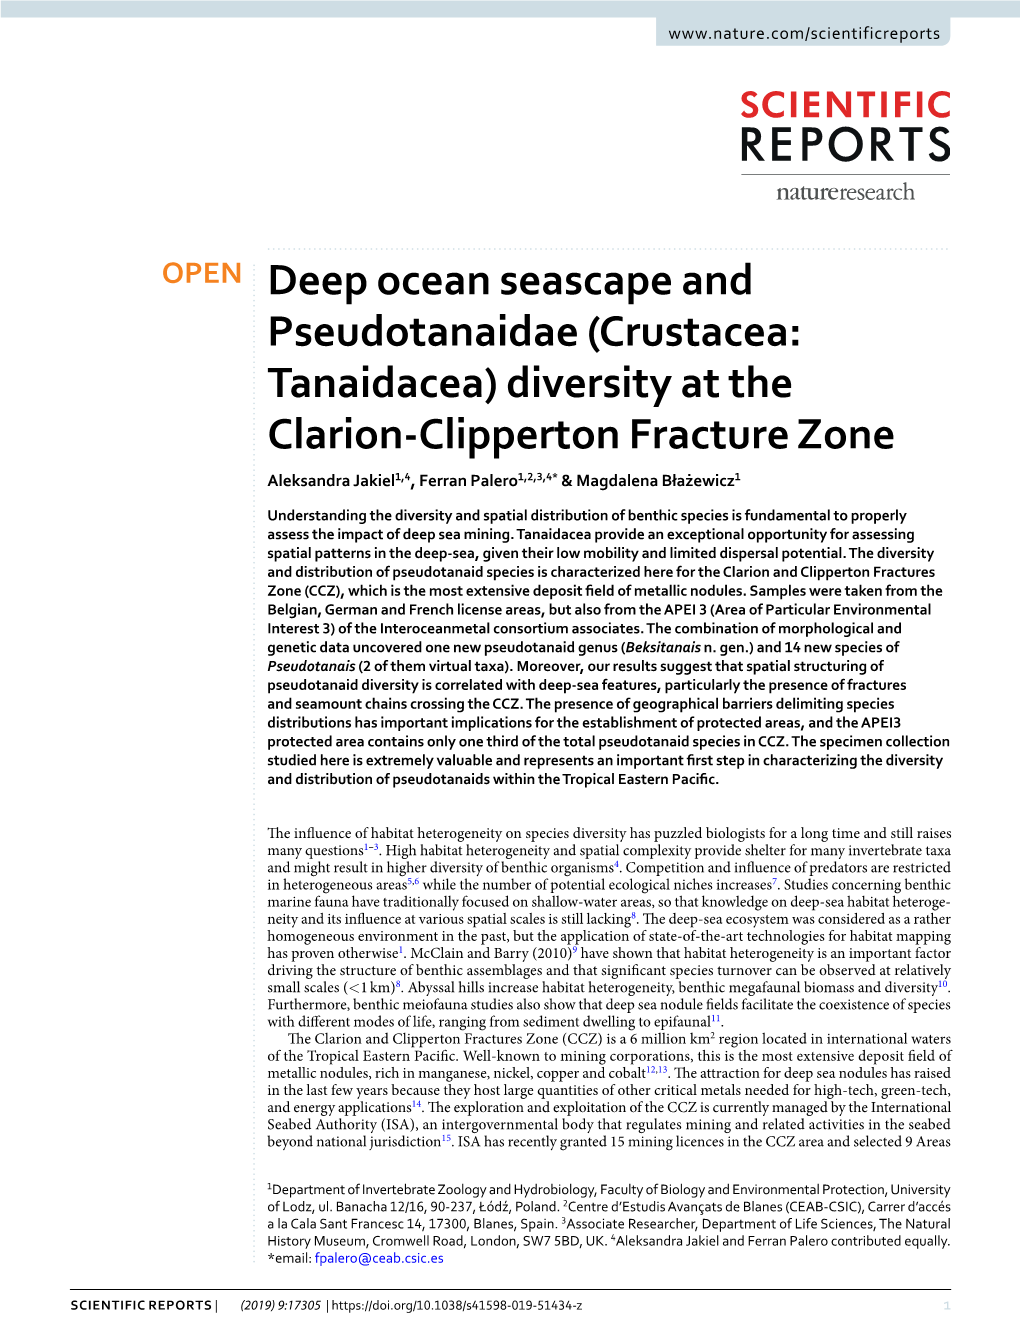 Deep Ocean Seascape and Pseudotanaidae (Crustacea